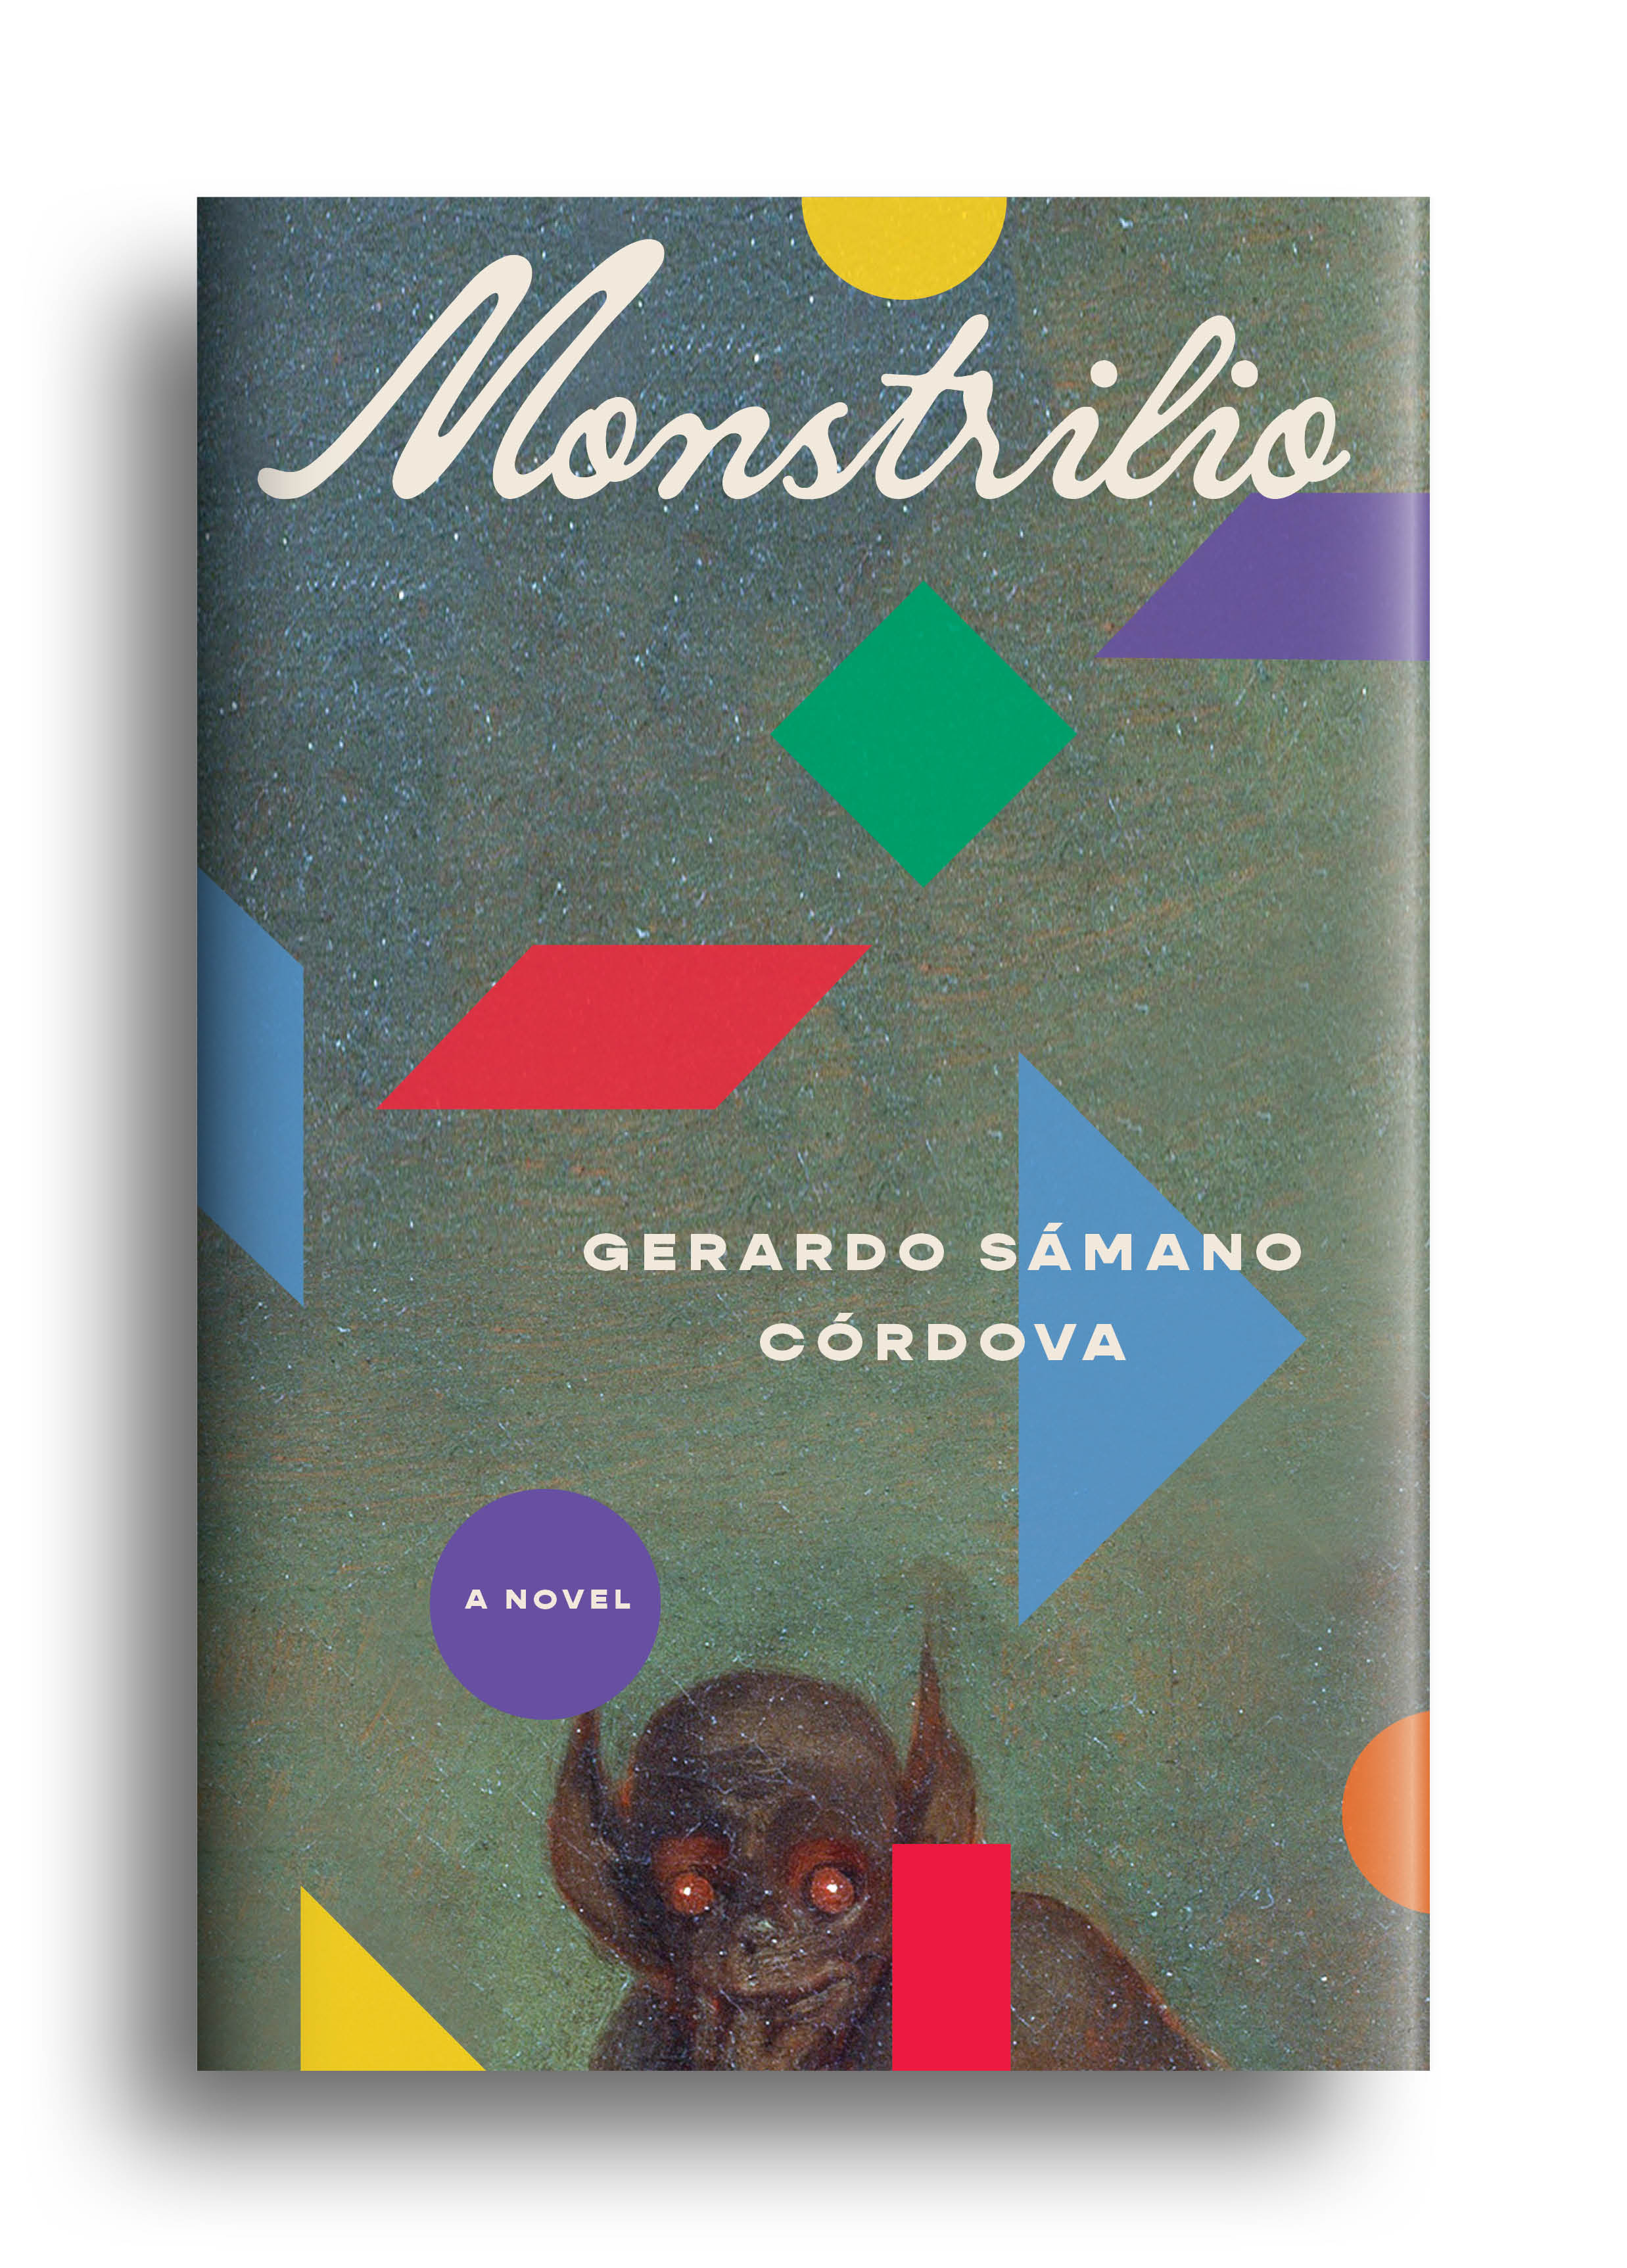 Book cover for Monstrilio, a novel written by Gerardo Sámano Córdova and published by Zando.